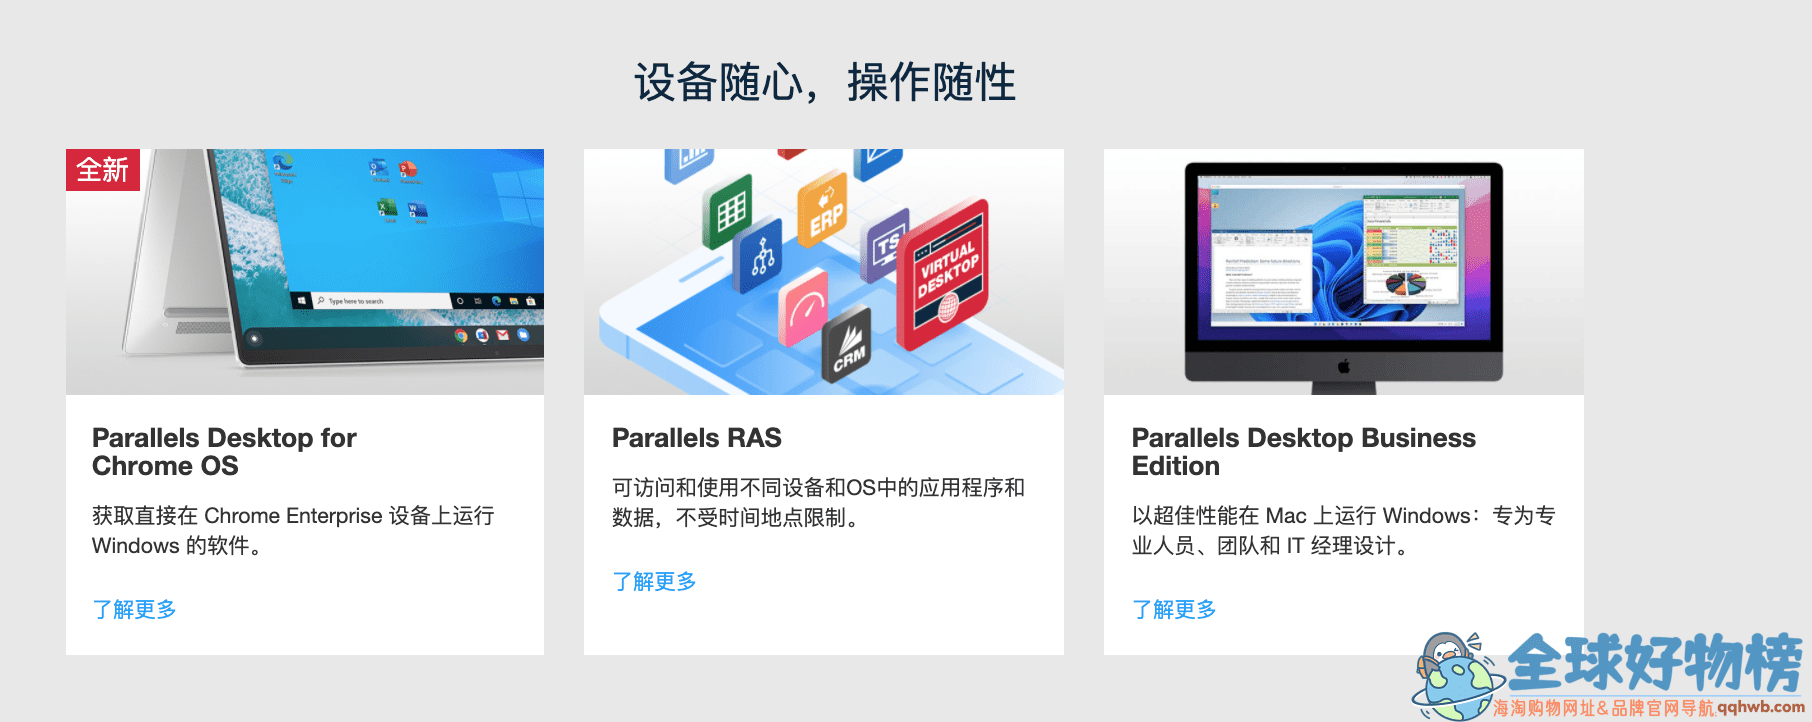 parallels17买正版打折优惠券代码-parallelsdesktop17折扣 ,双十一 7折,新老用户均可